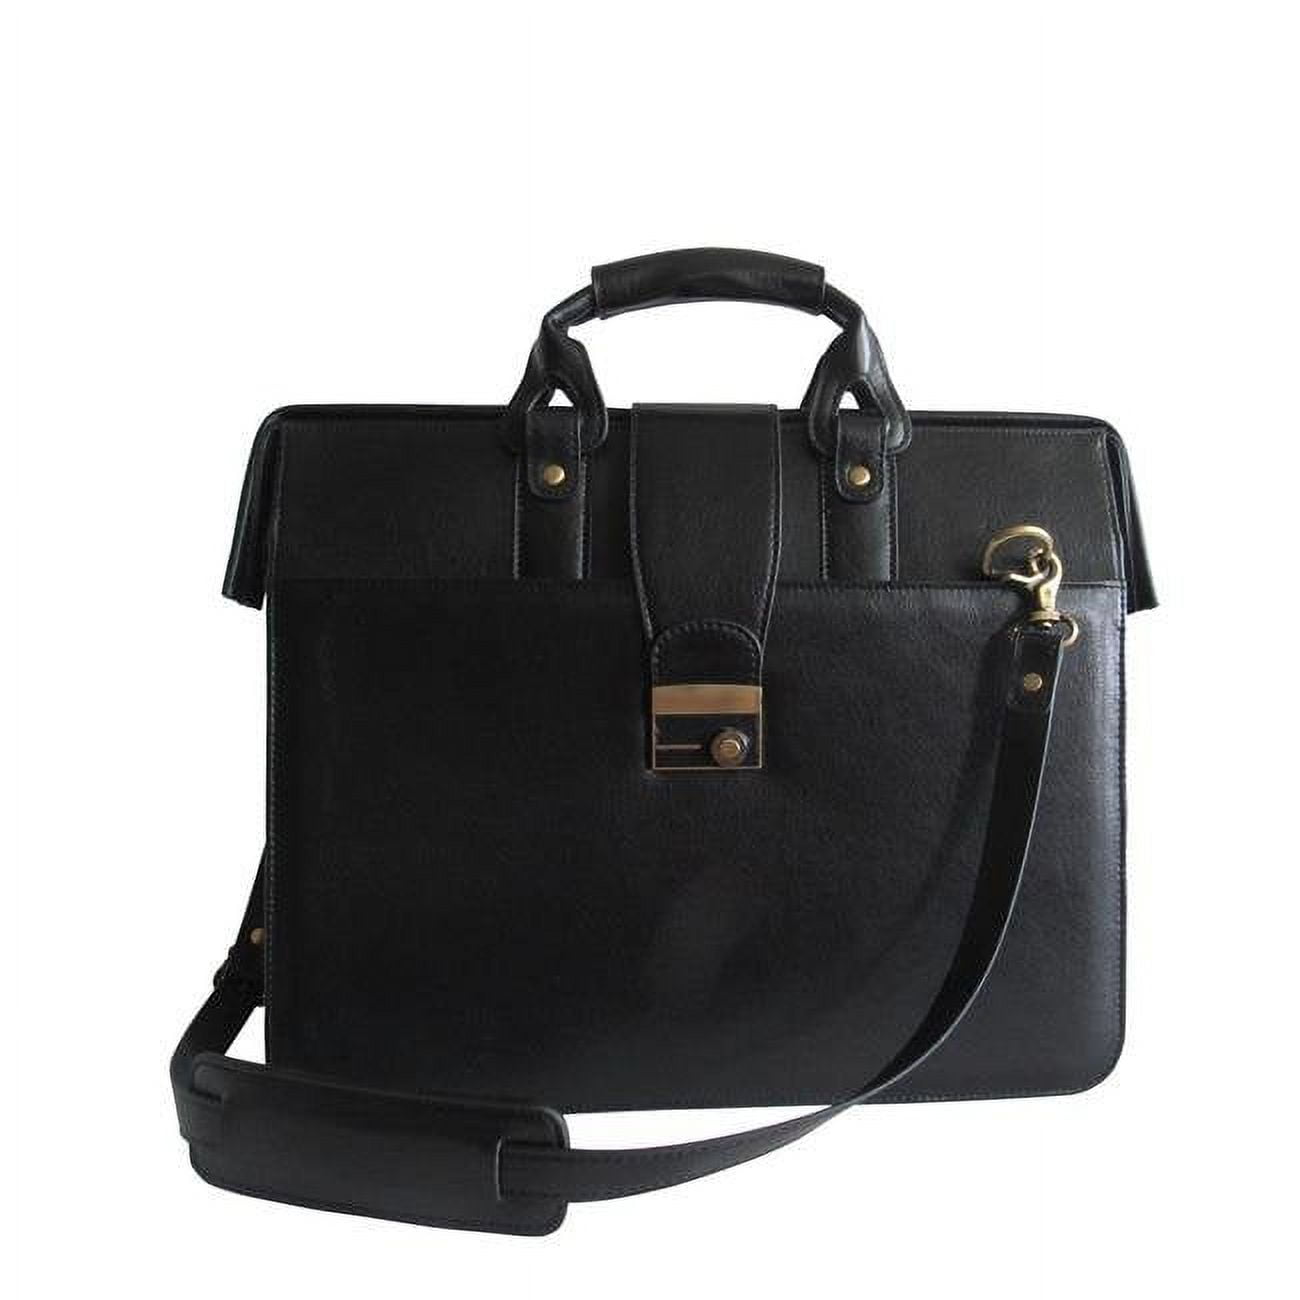 AmeriLeather Partner Leather Briefcase Bag